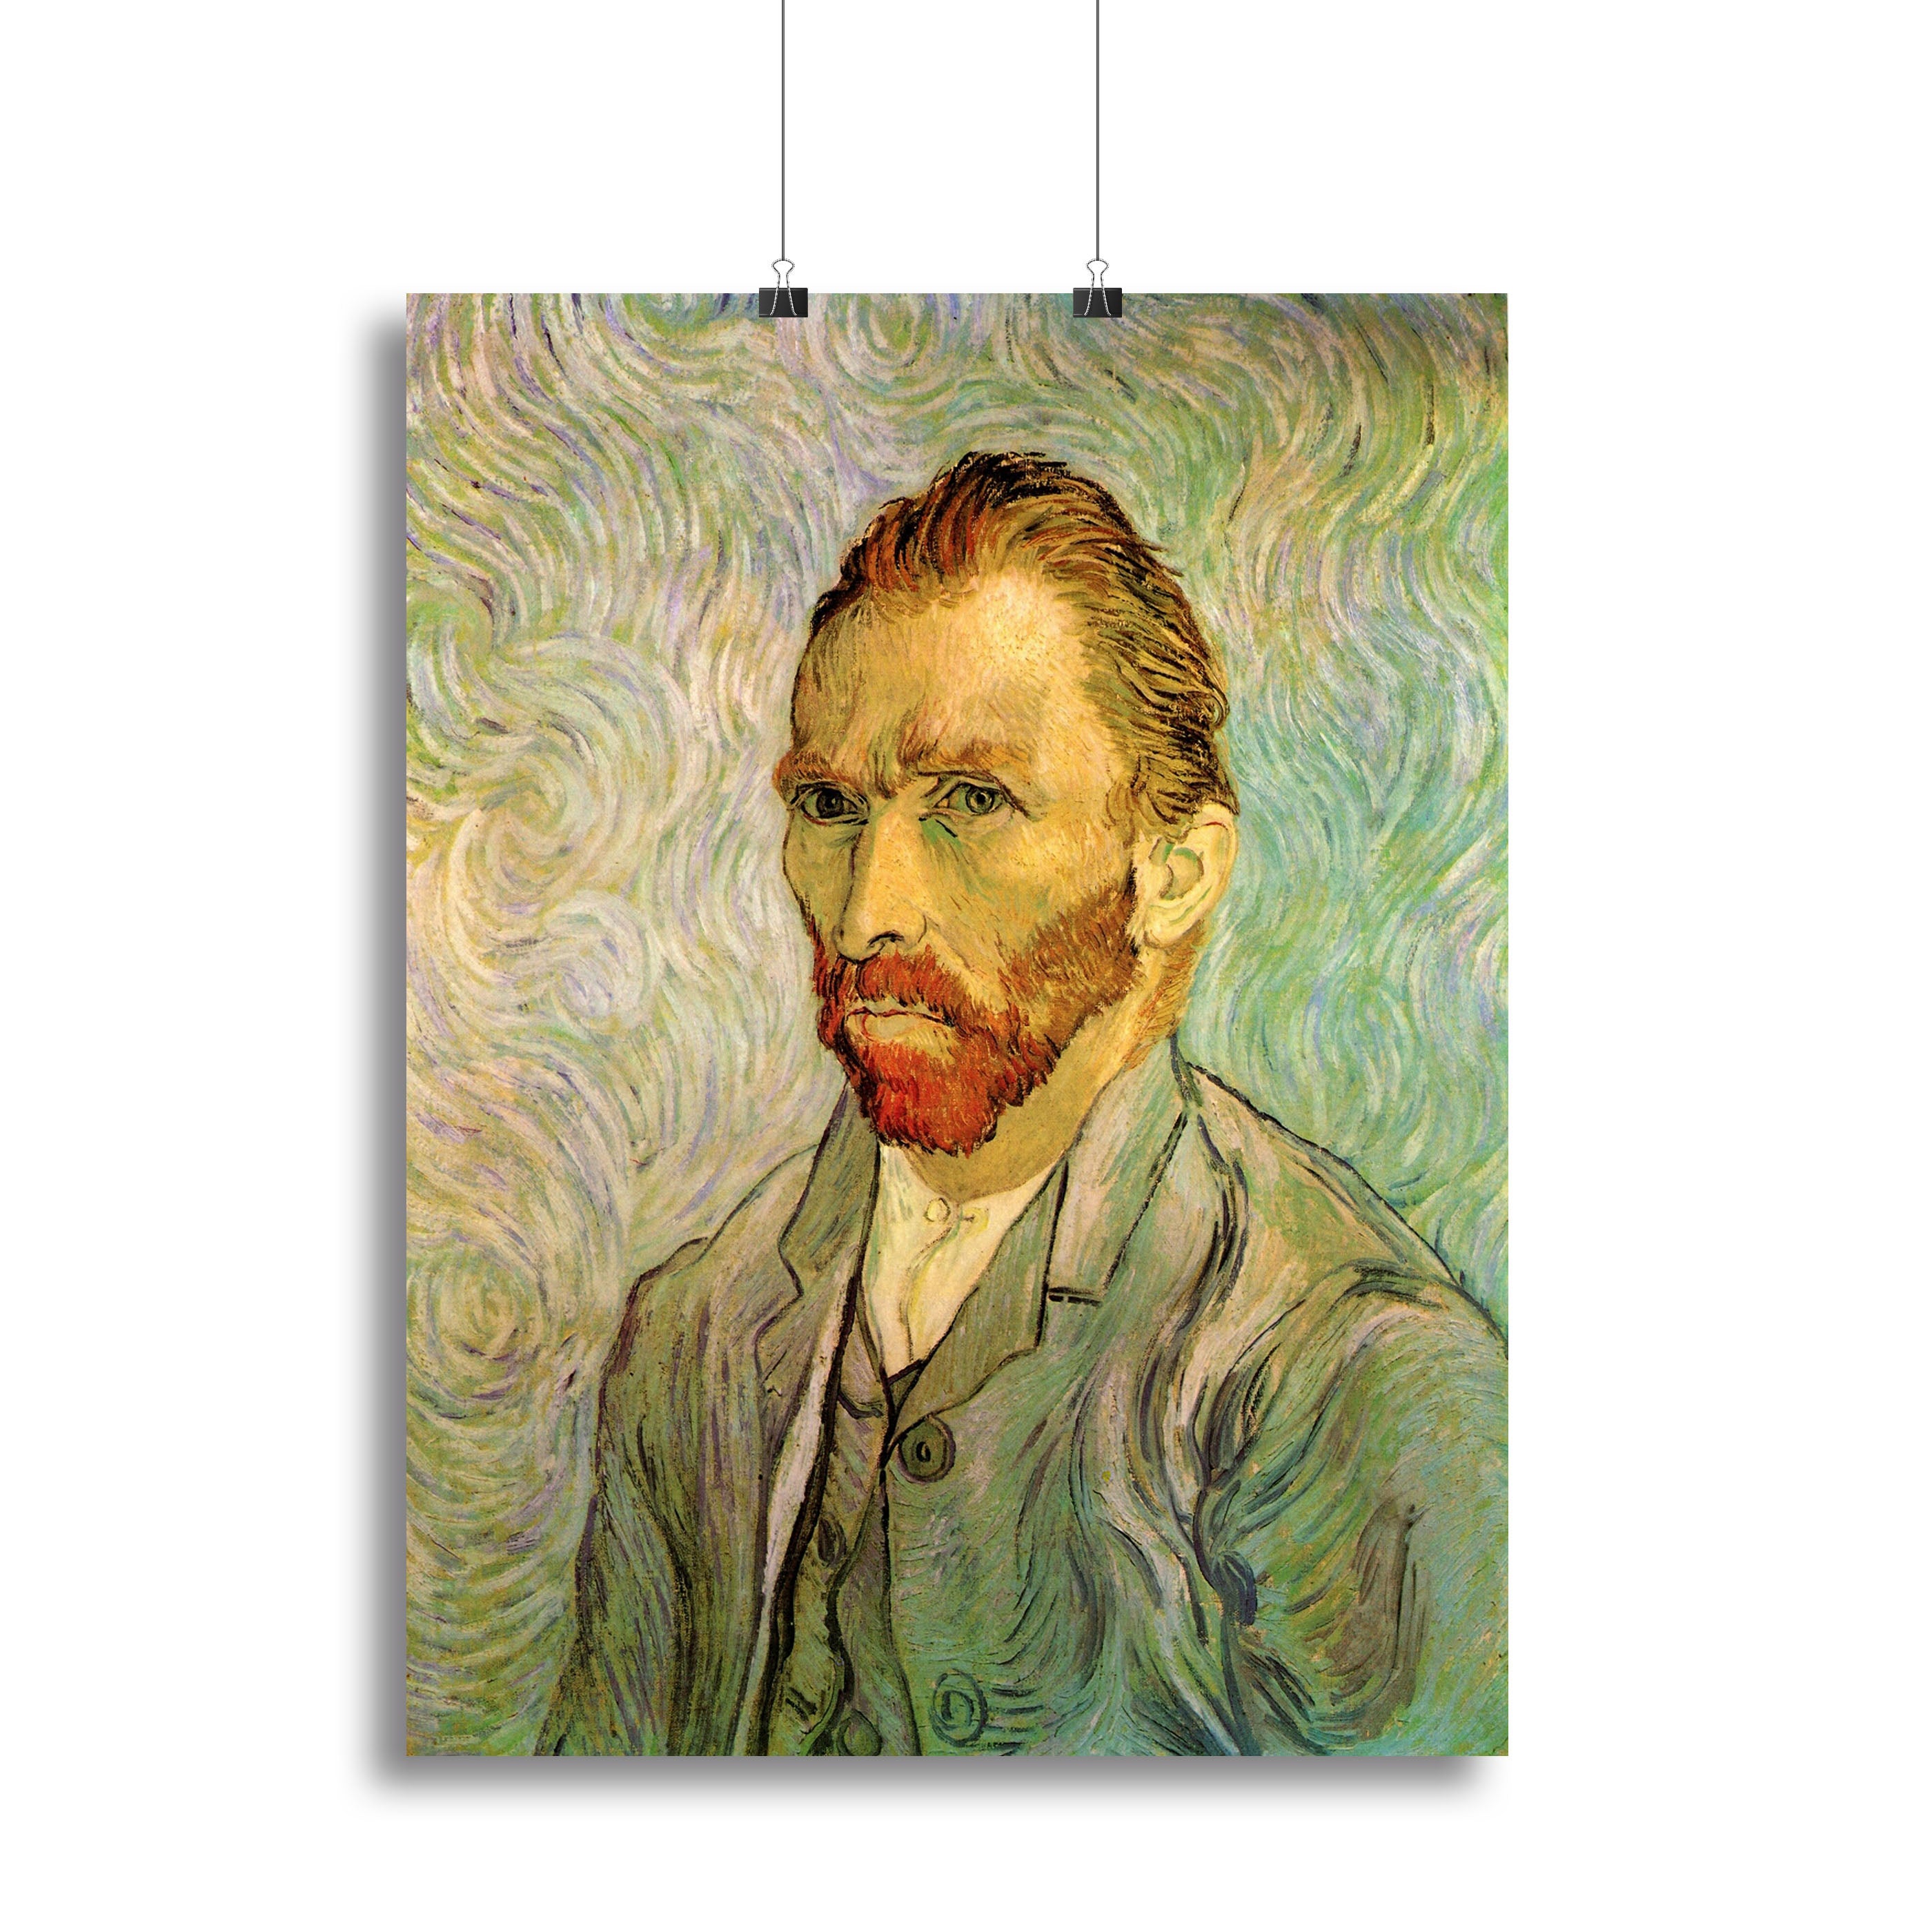 Self-Portrait 2 by Van Gogh Canvas Print or Poster - Canvas Art Rocks - 2